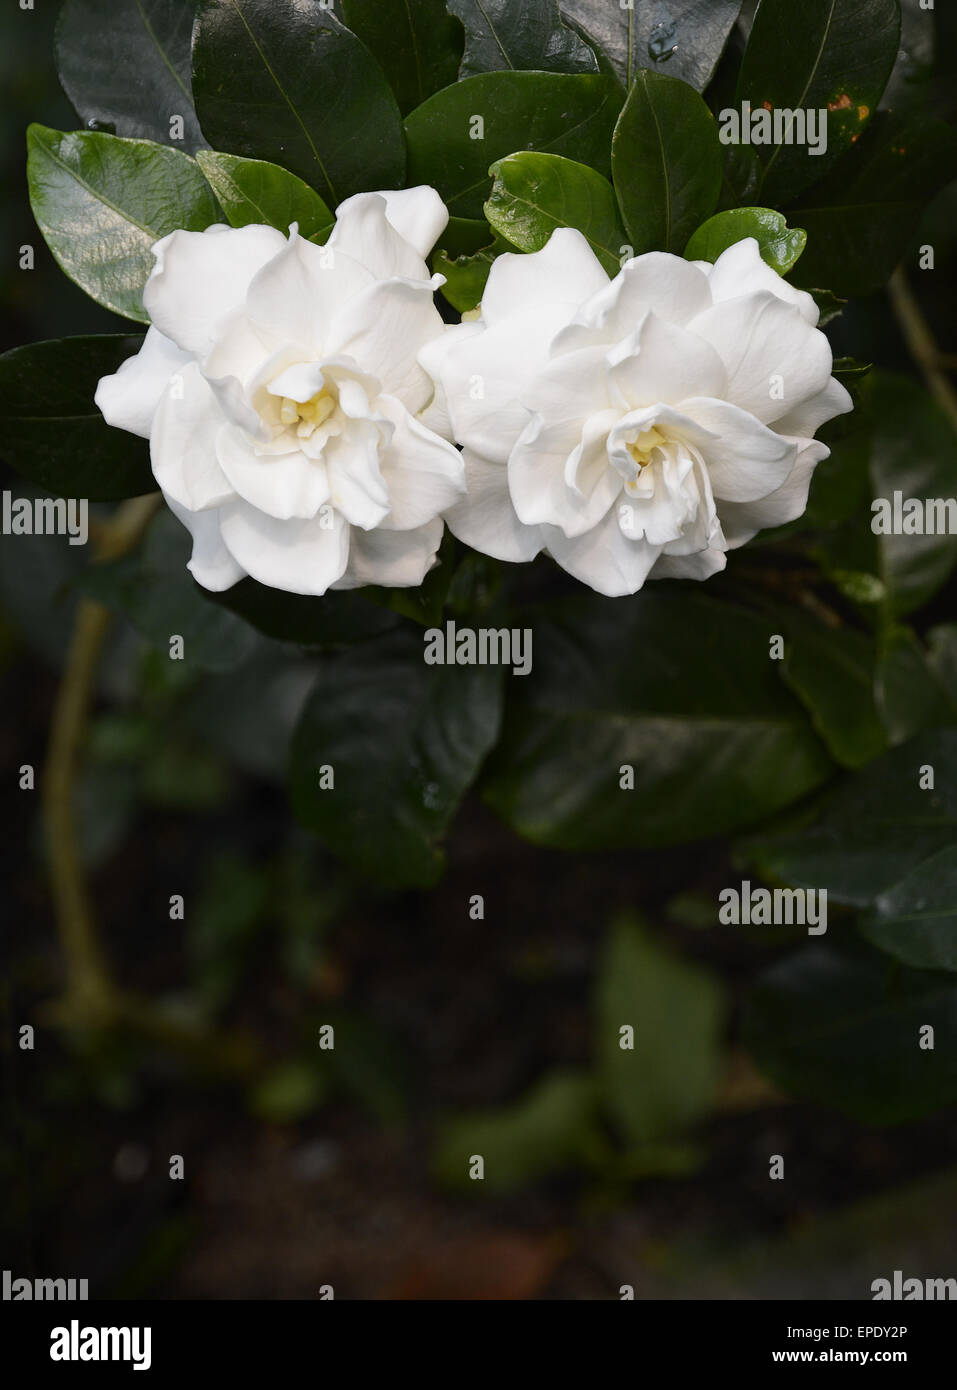 White gardenia flower on dark background. Stock Photo